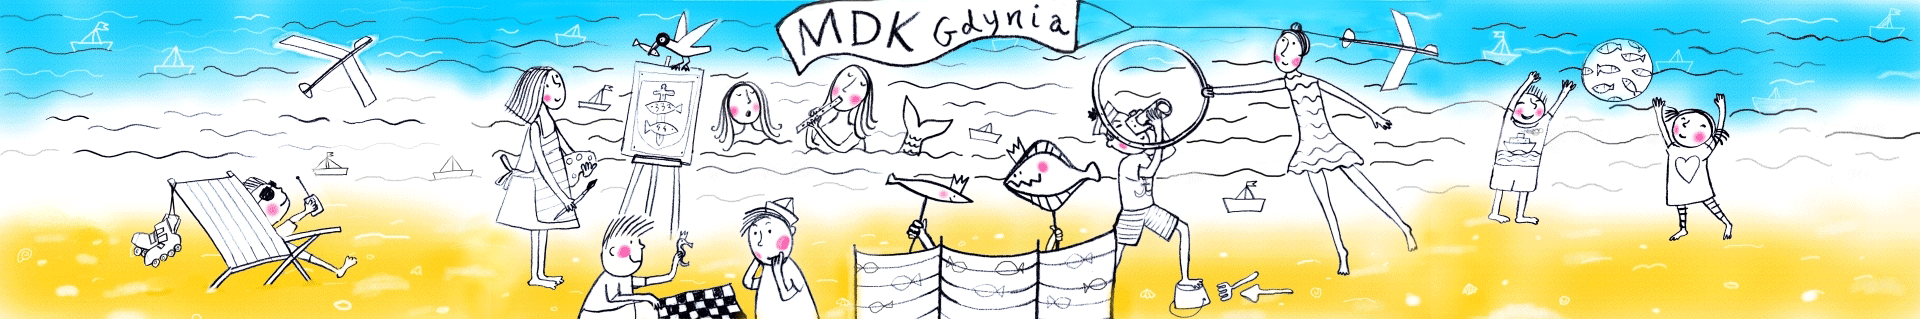 MDK Gdynia - Banner